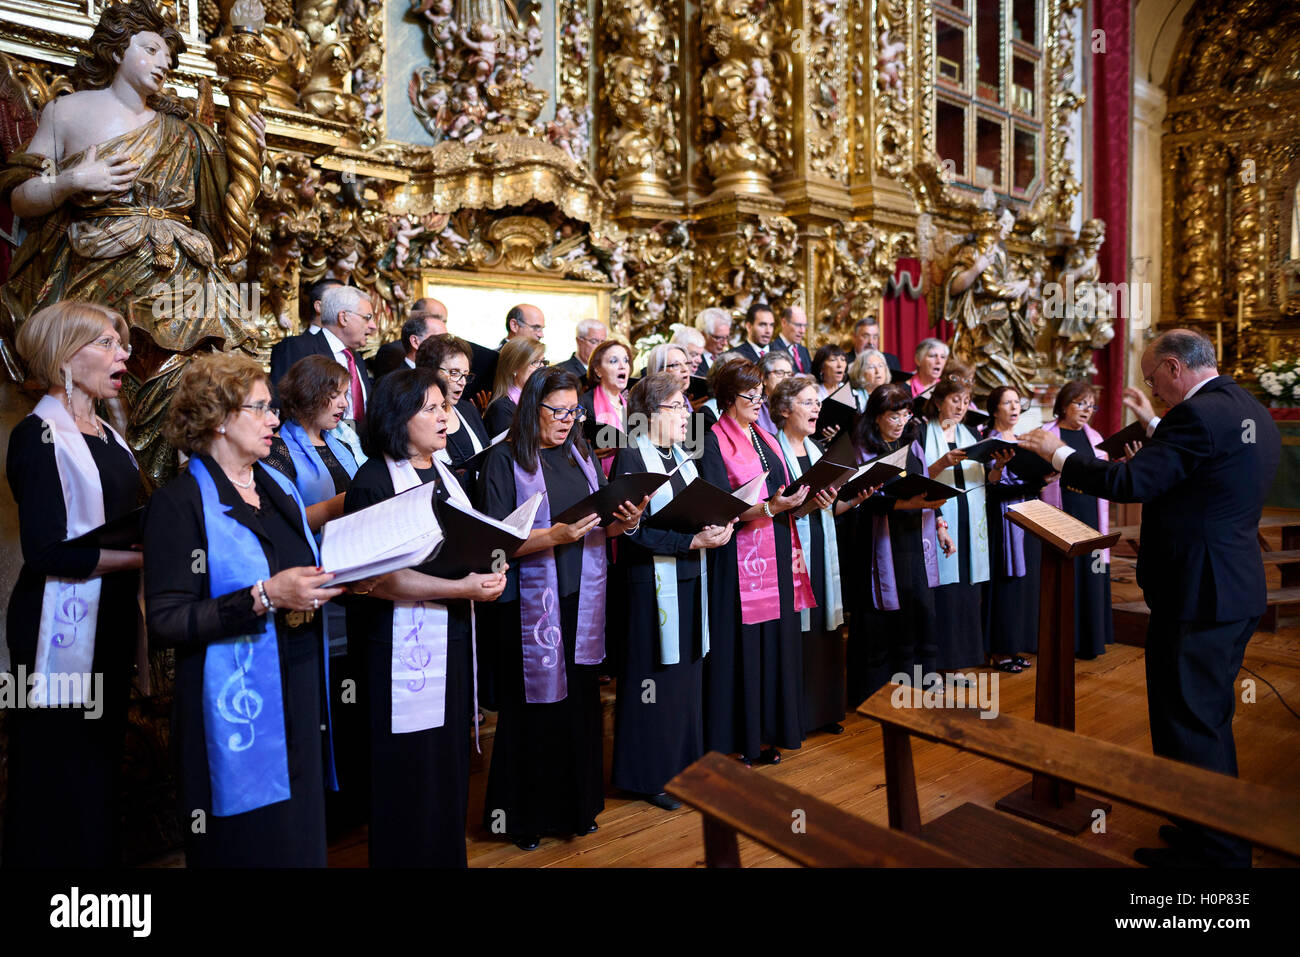 Church choir singing Stock Photo